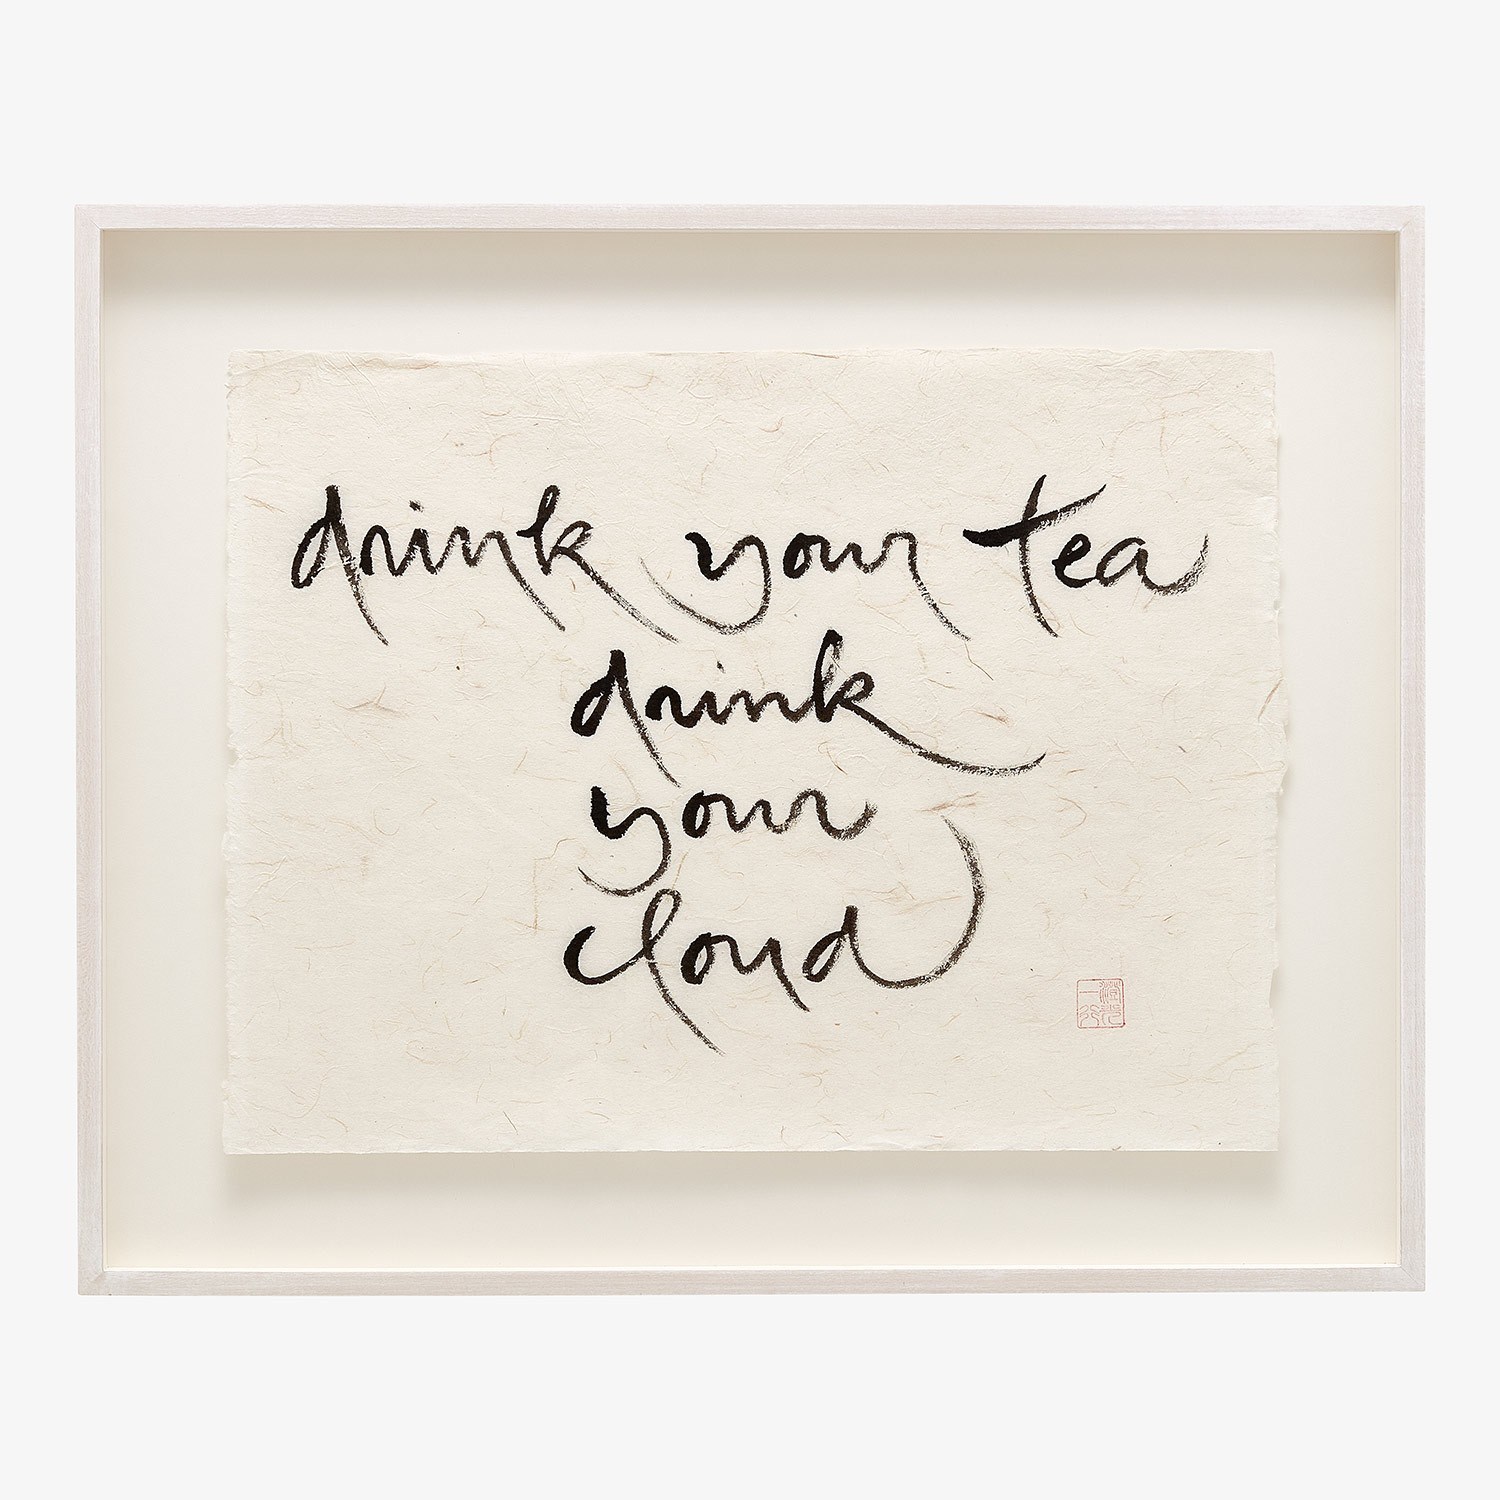 Drink your tea drink your cloud